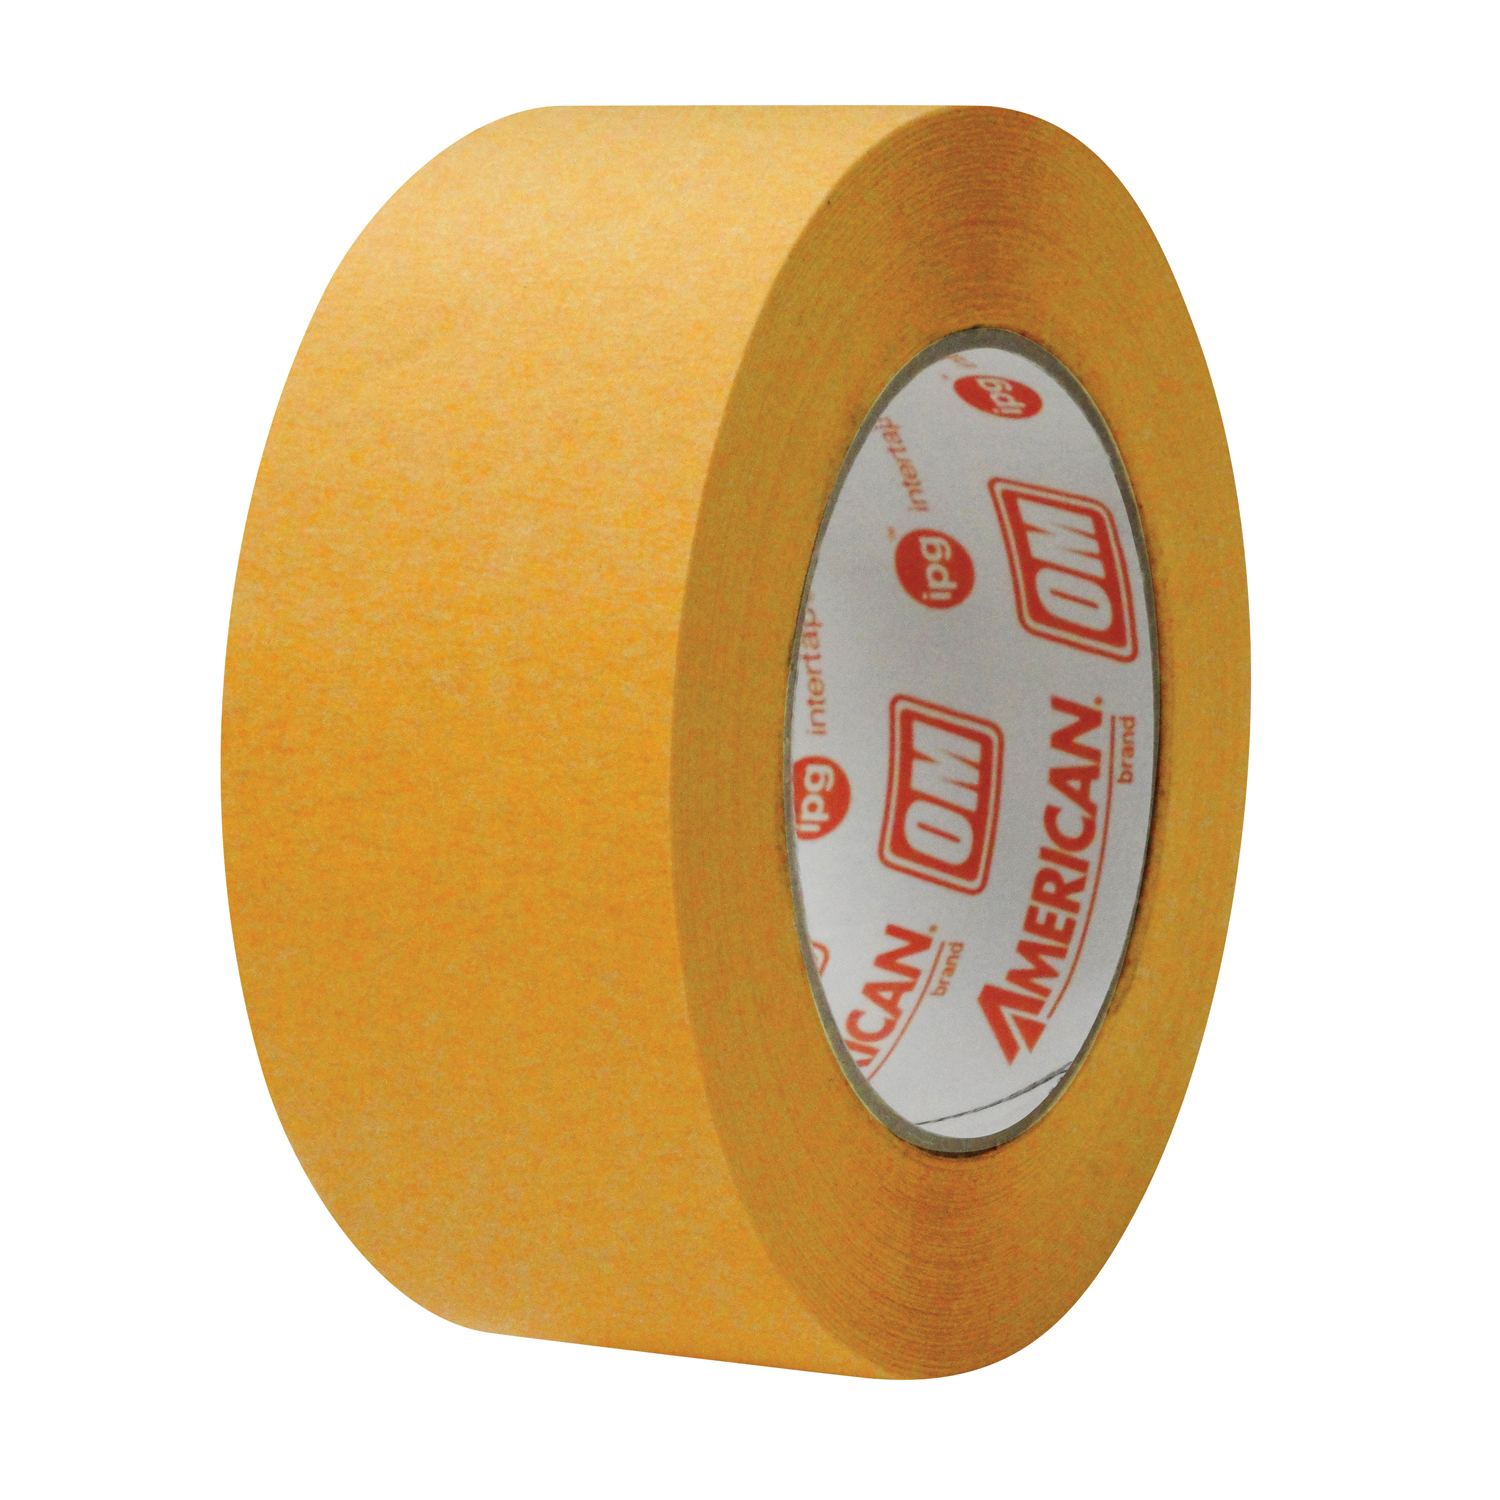 Masking Tape: OrangeMask (OM) American® brand – Aerotape